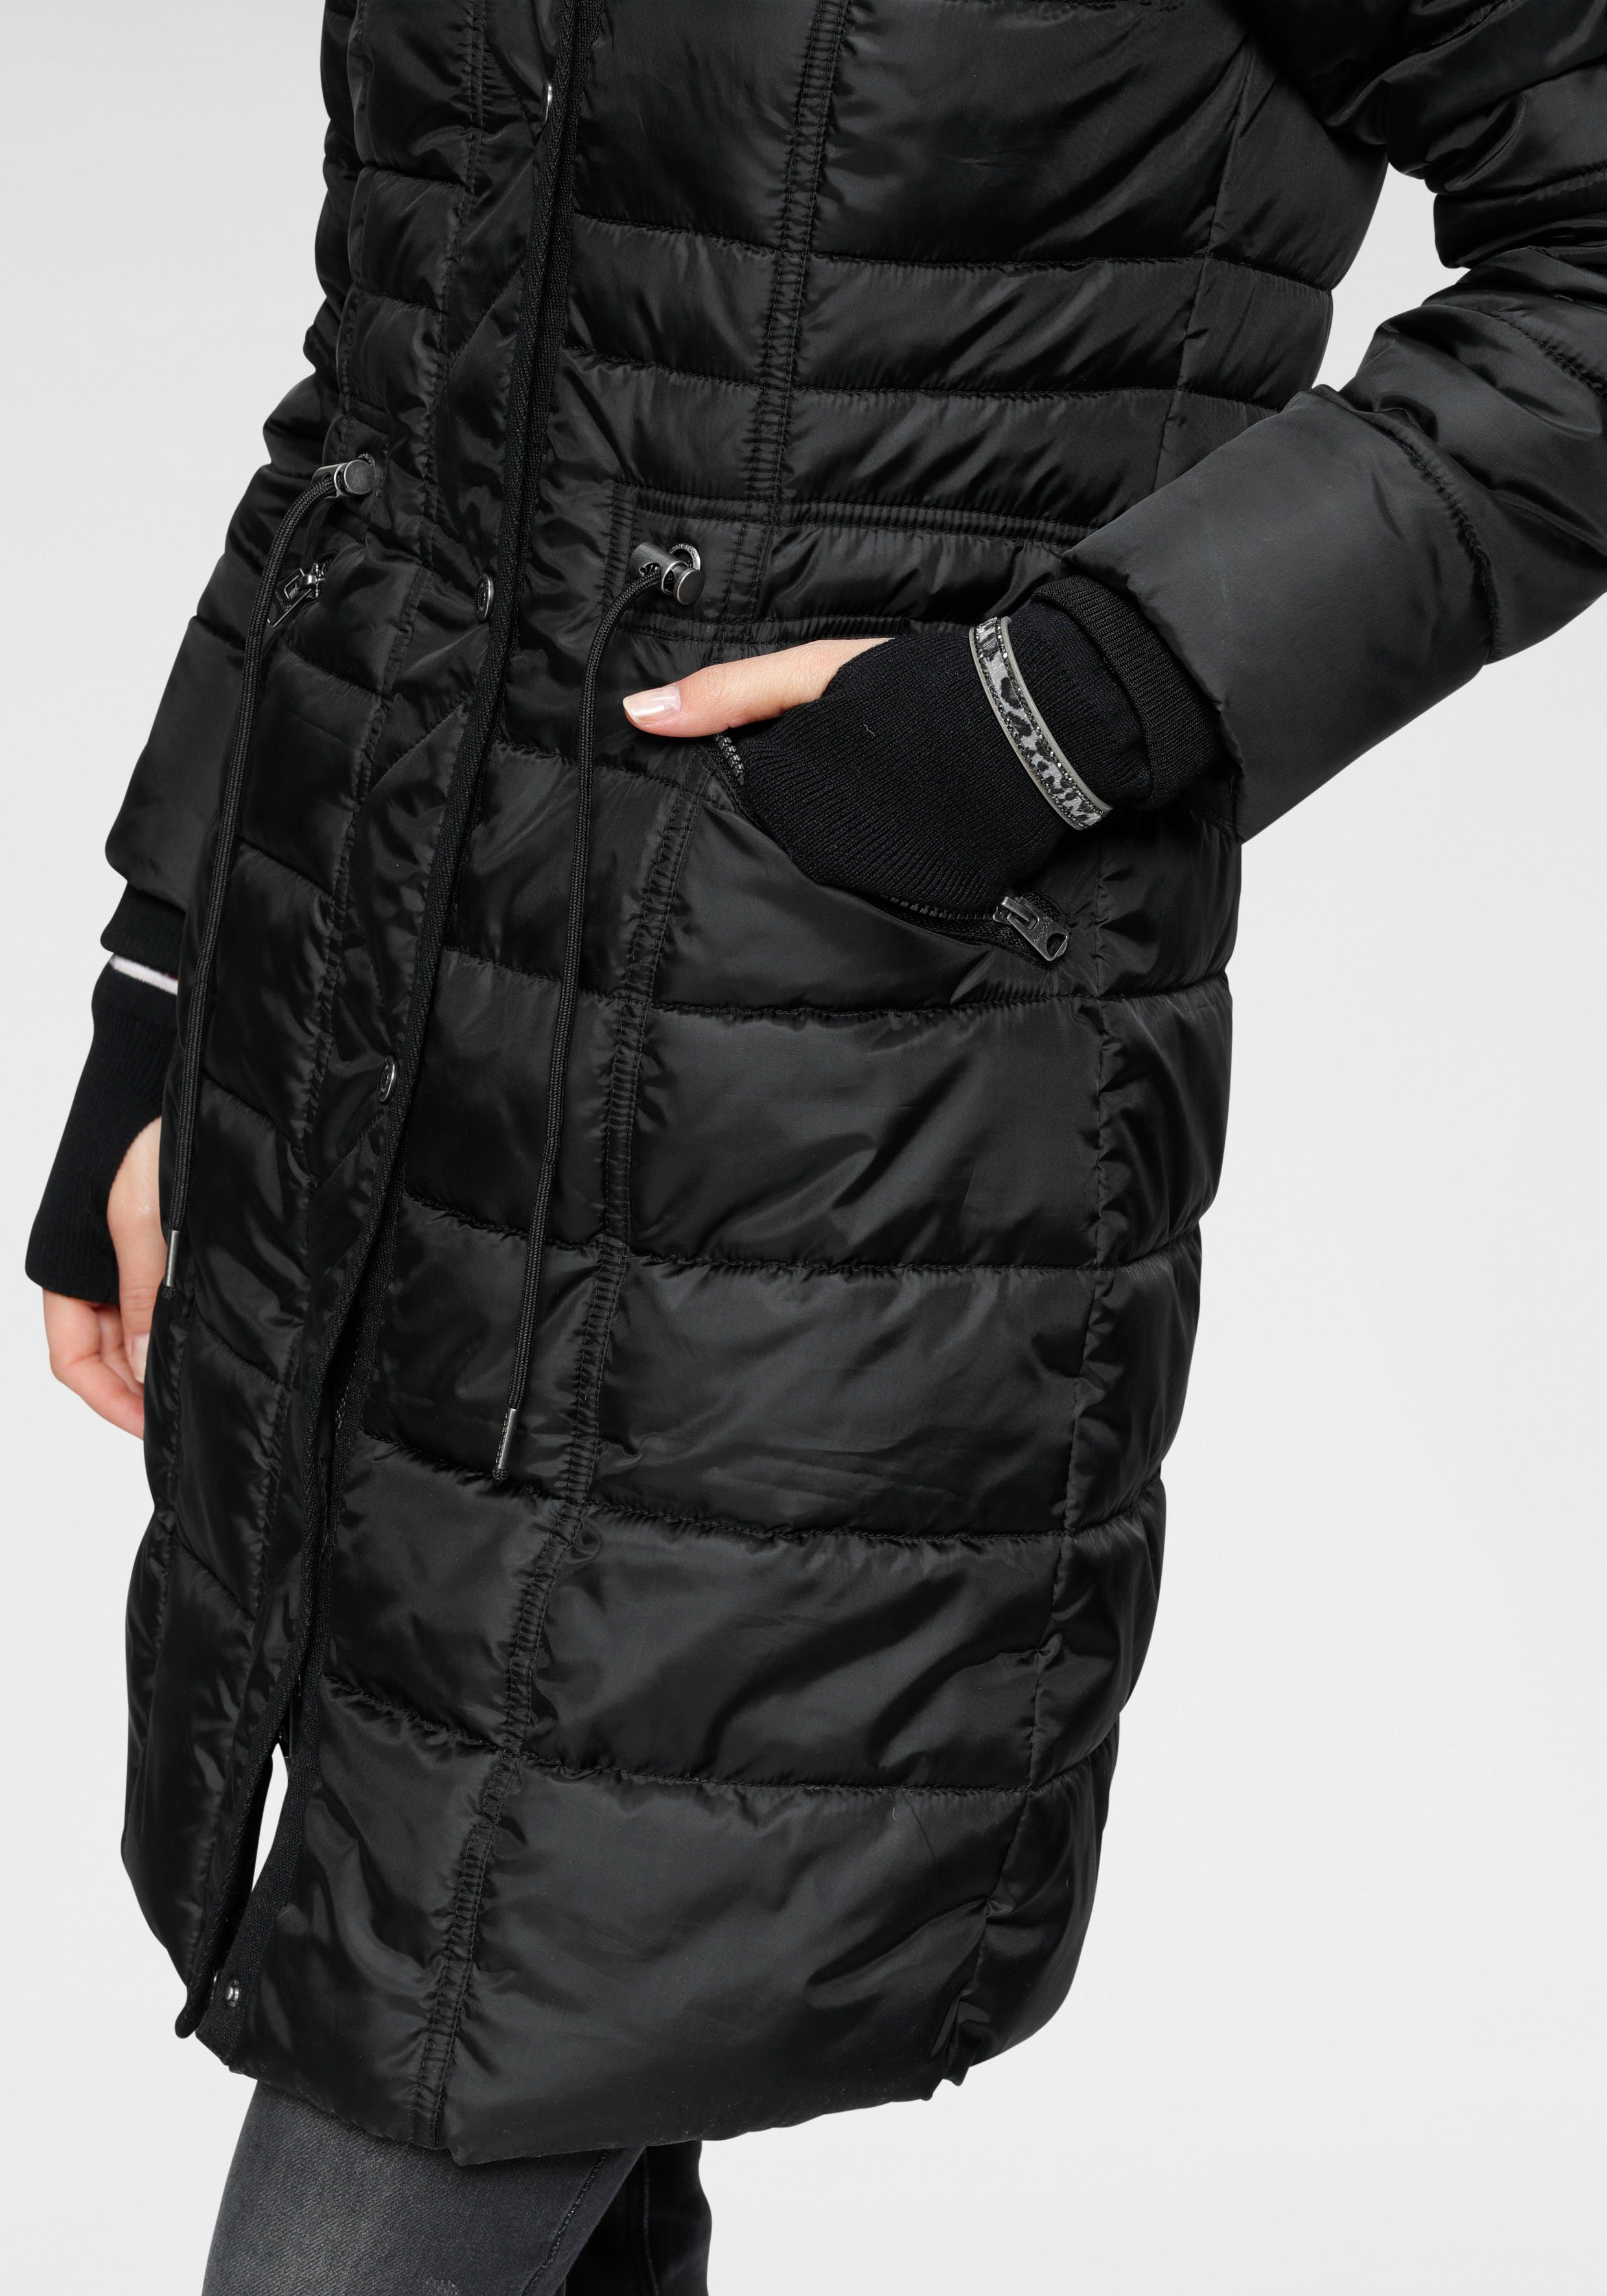 KangaROOS mit (Jacke aus schwarz Material) an kuscheligem, Steppjacke Fellimitat-Kragen nachhaltigem abnehmbarem Kapuze der